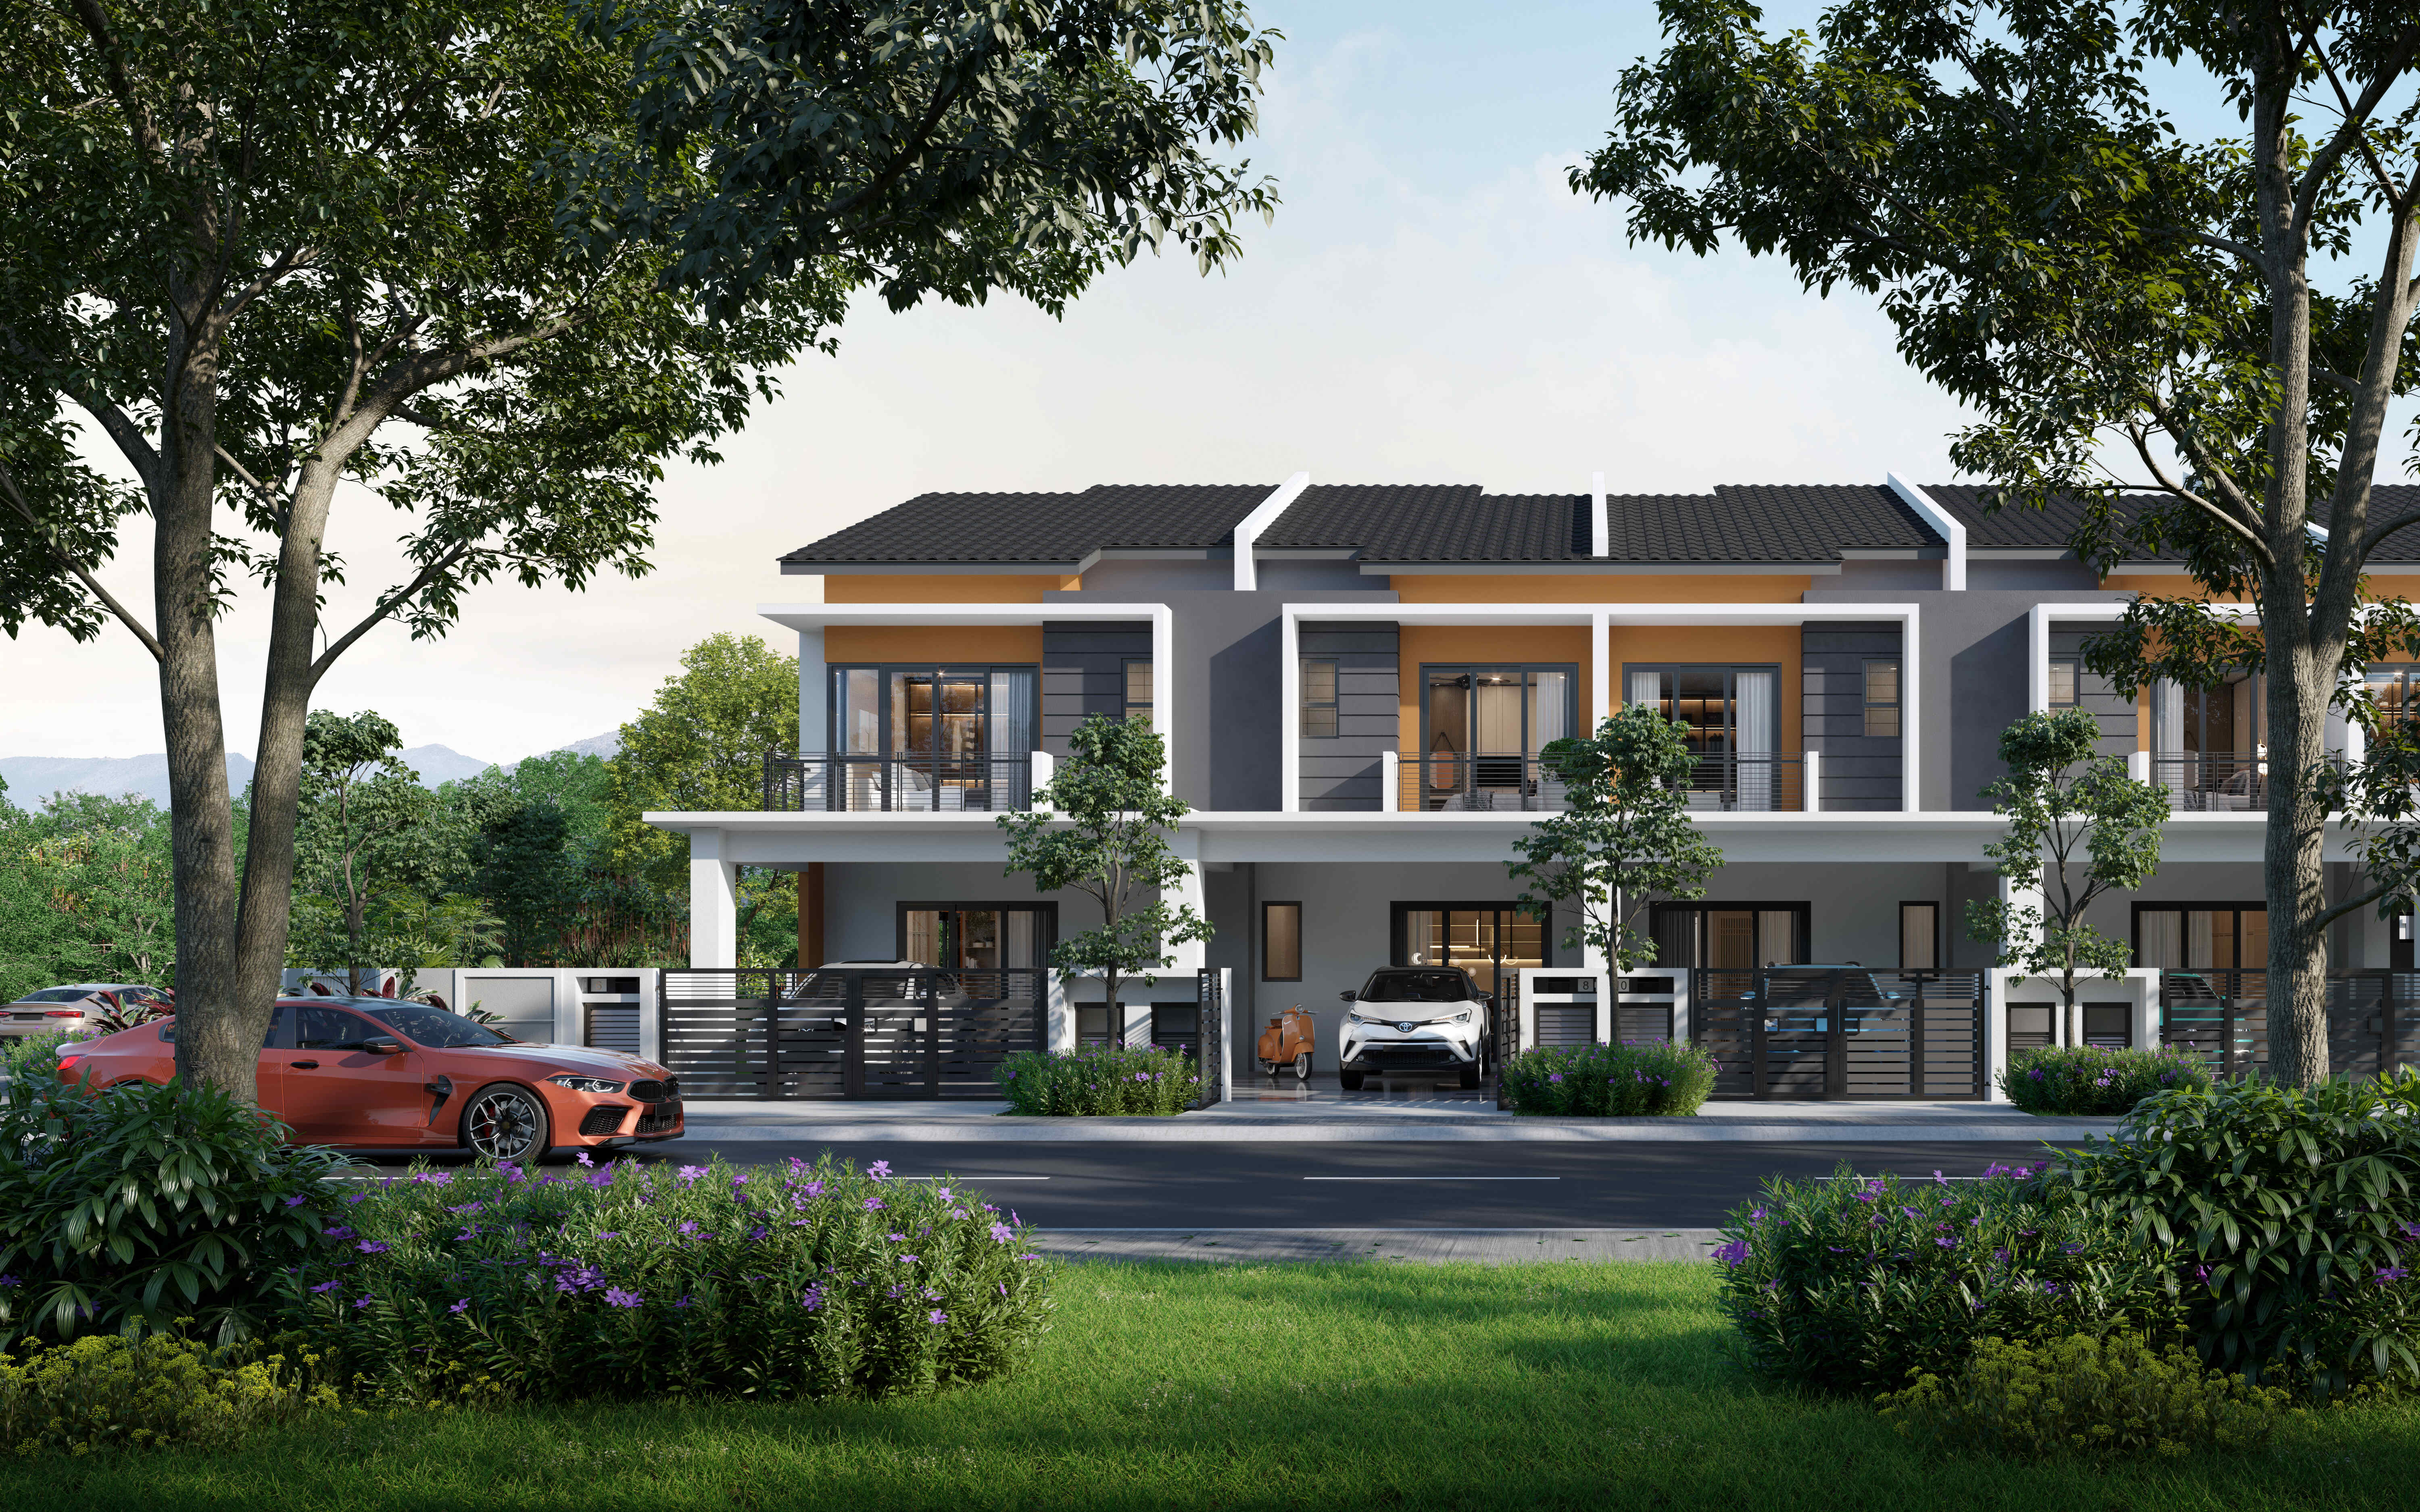 IJM Land launches brand new business hub in Bandar Rimbayu